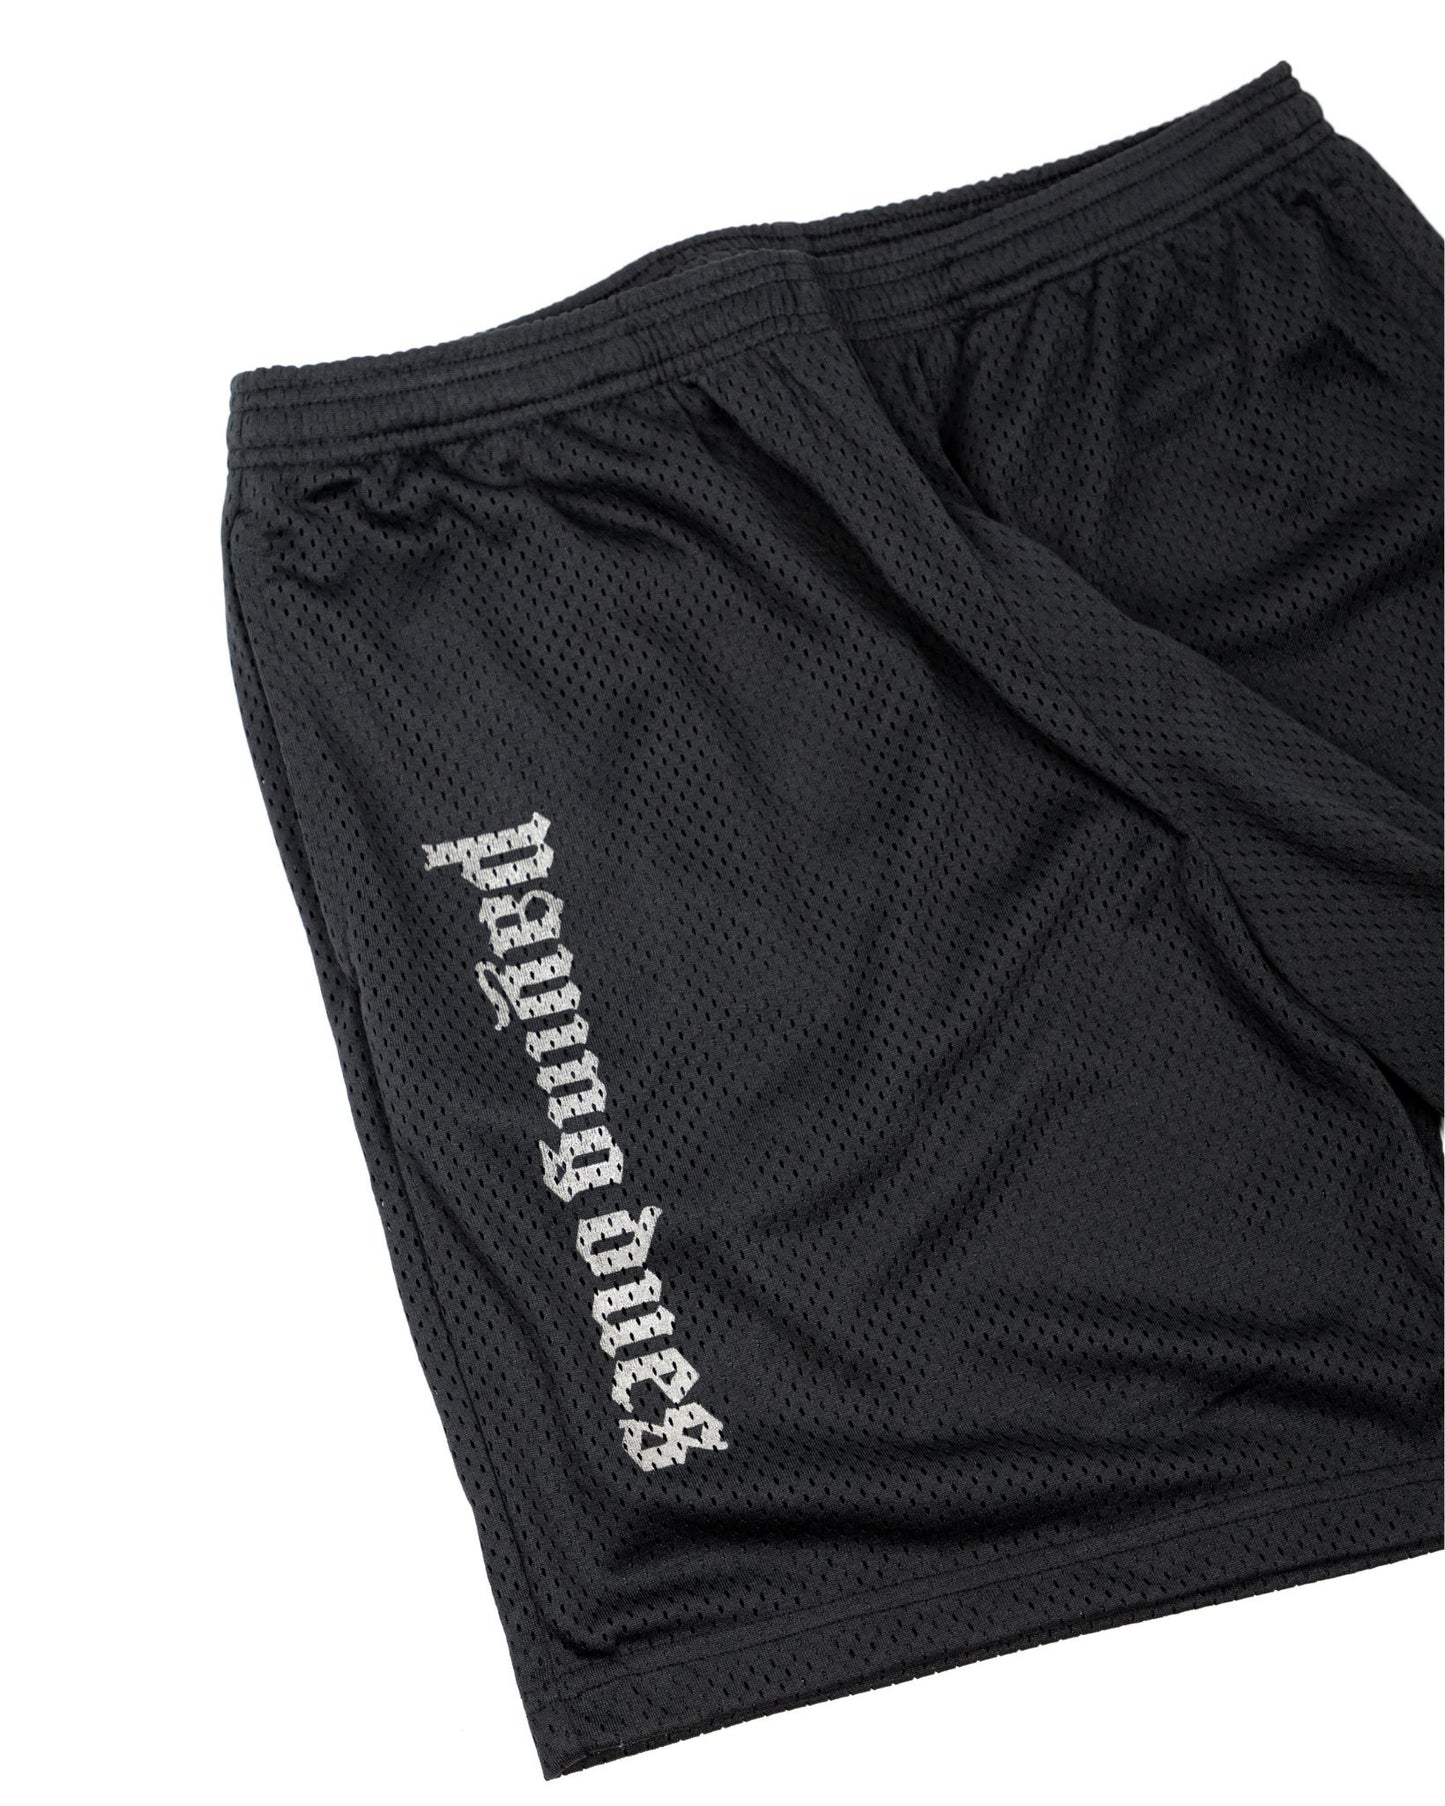 Bulged Founder Mesh Shorts